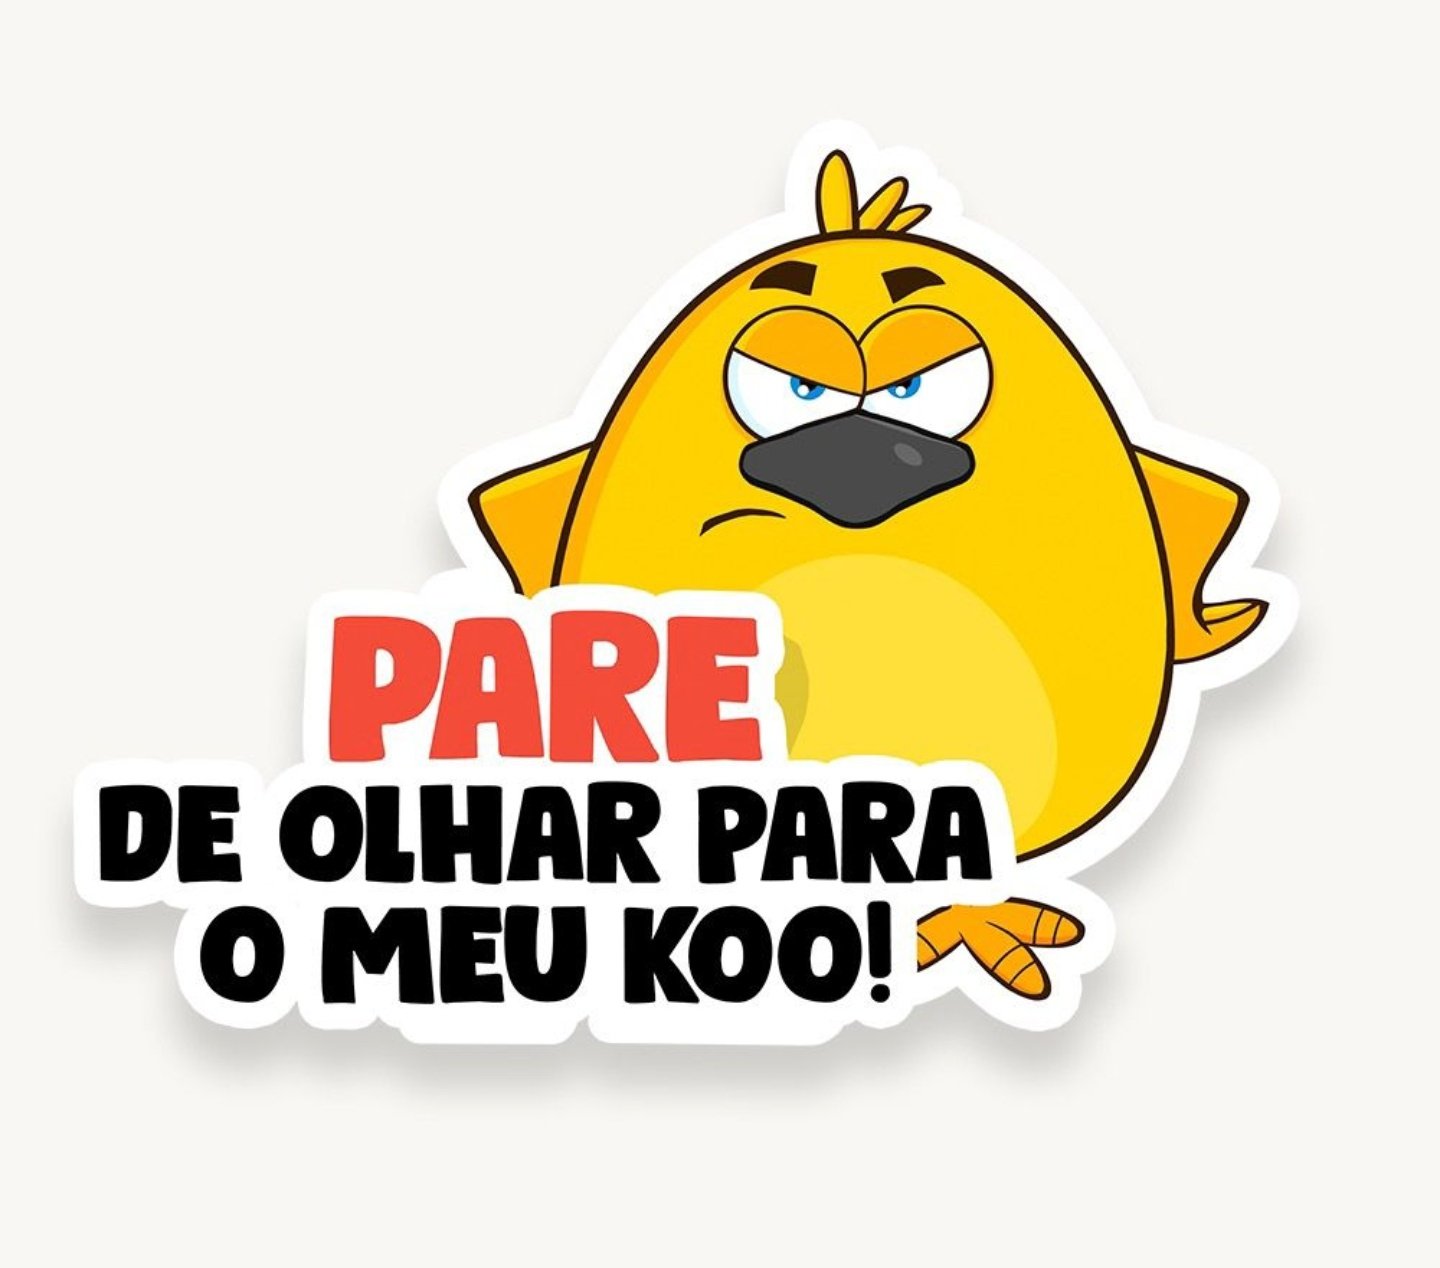 Koo, alternativa ao Twitter, e app Fifa Plus lideram em downloads no Brasil  